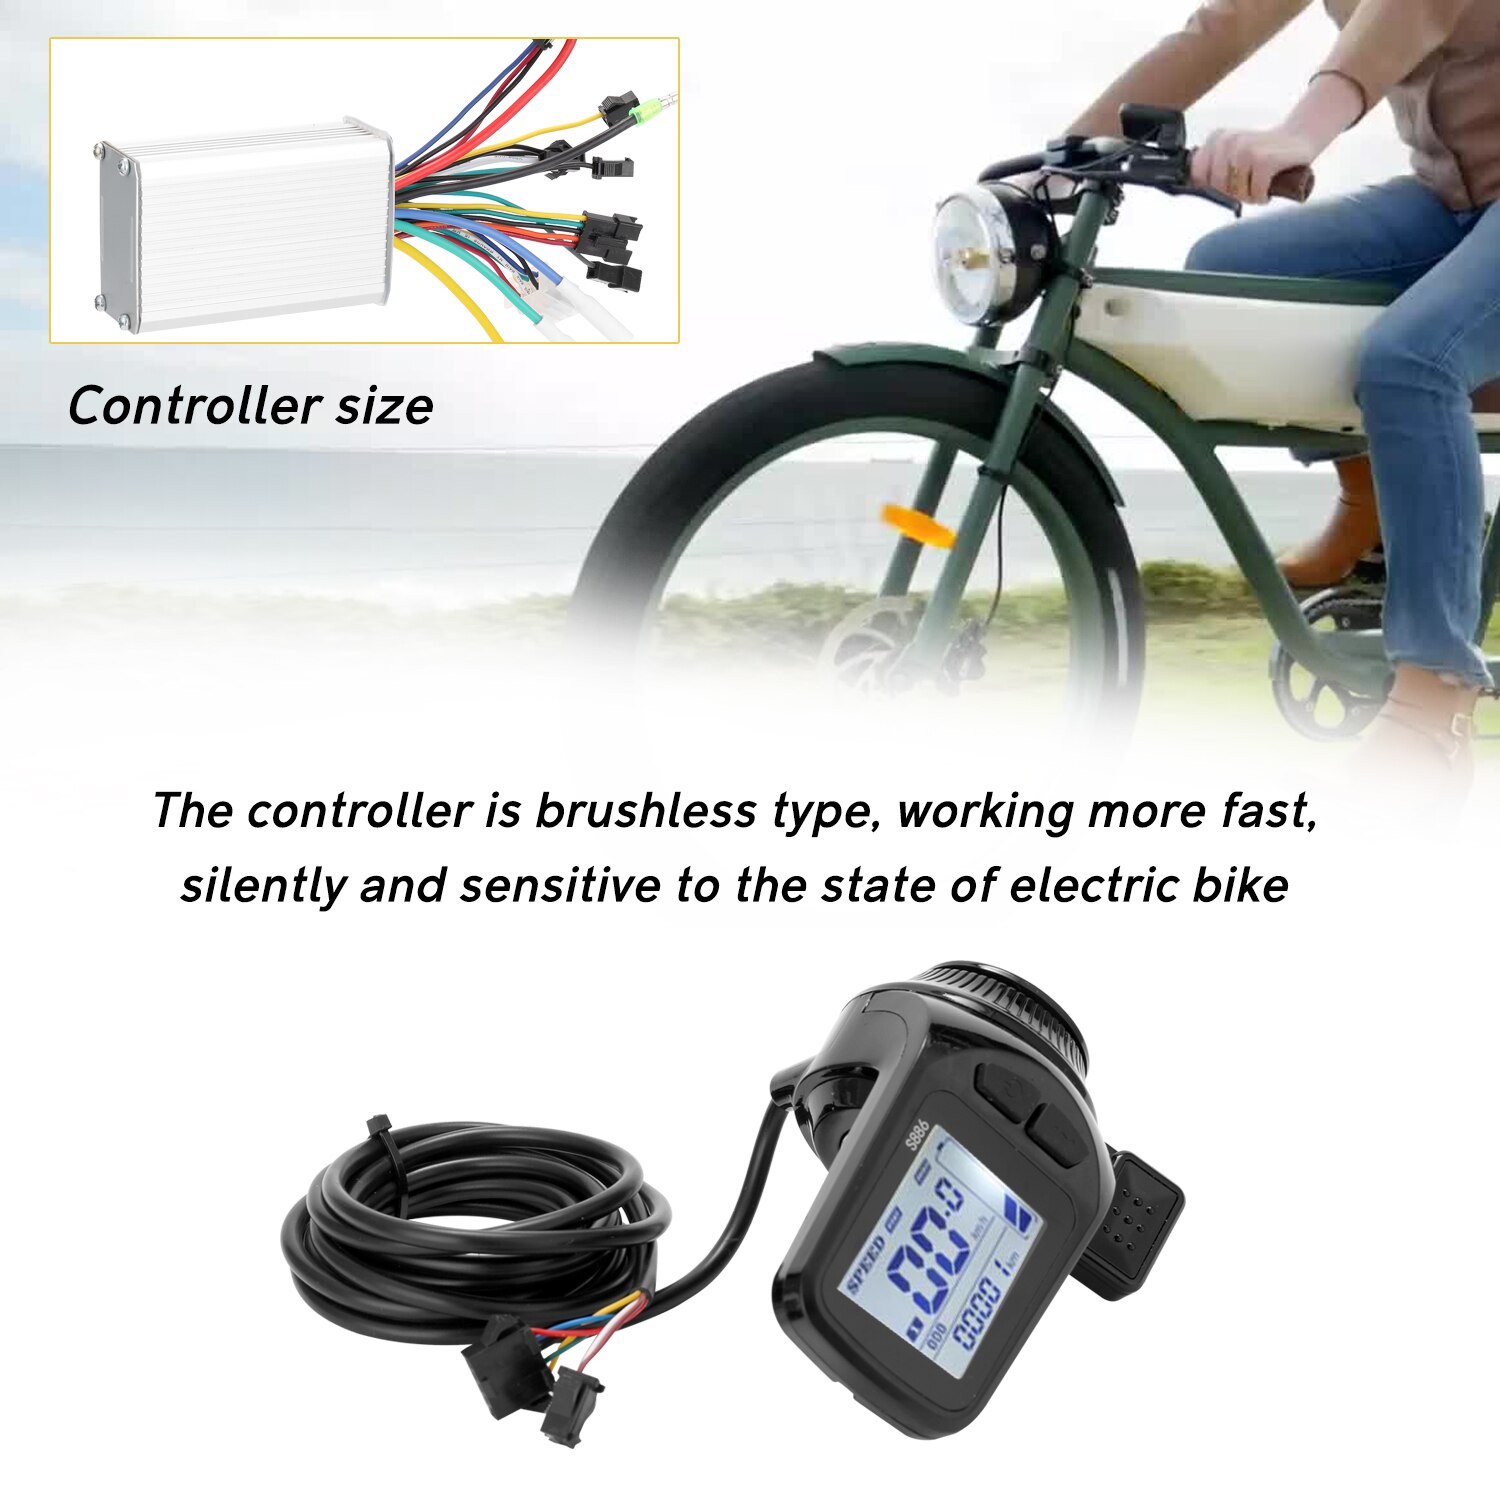 36v-60v 350w motor børsteløs controller lcd display panel tommelfingerregel elektriske cykler scooter børsteløs controller kit